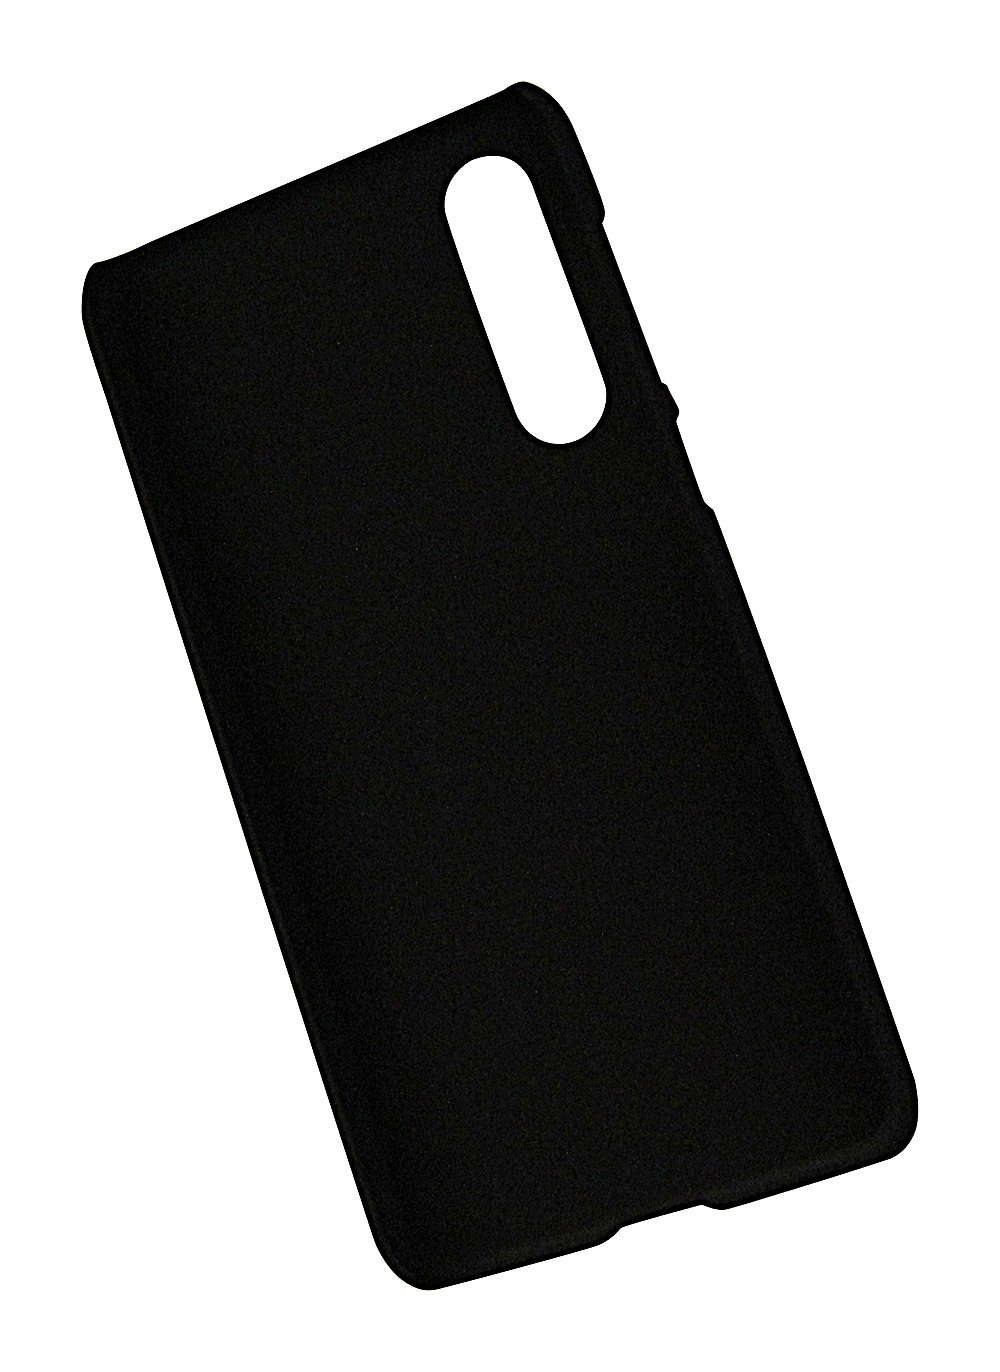 Skimblocker XL Magnet Wallet Xiaomi Mi 9 SE